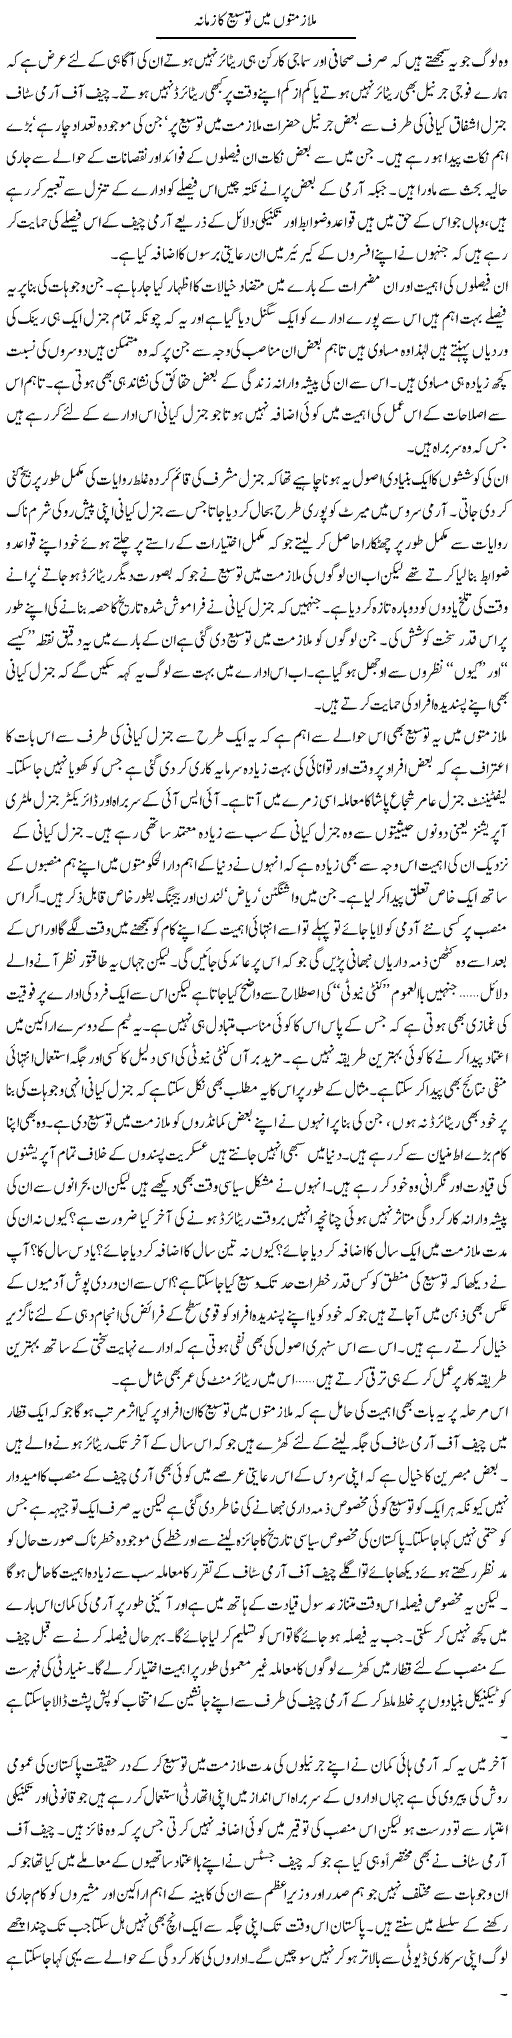 Mulazmton mai tosee Express Column Talat Hussain 13 March 2010